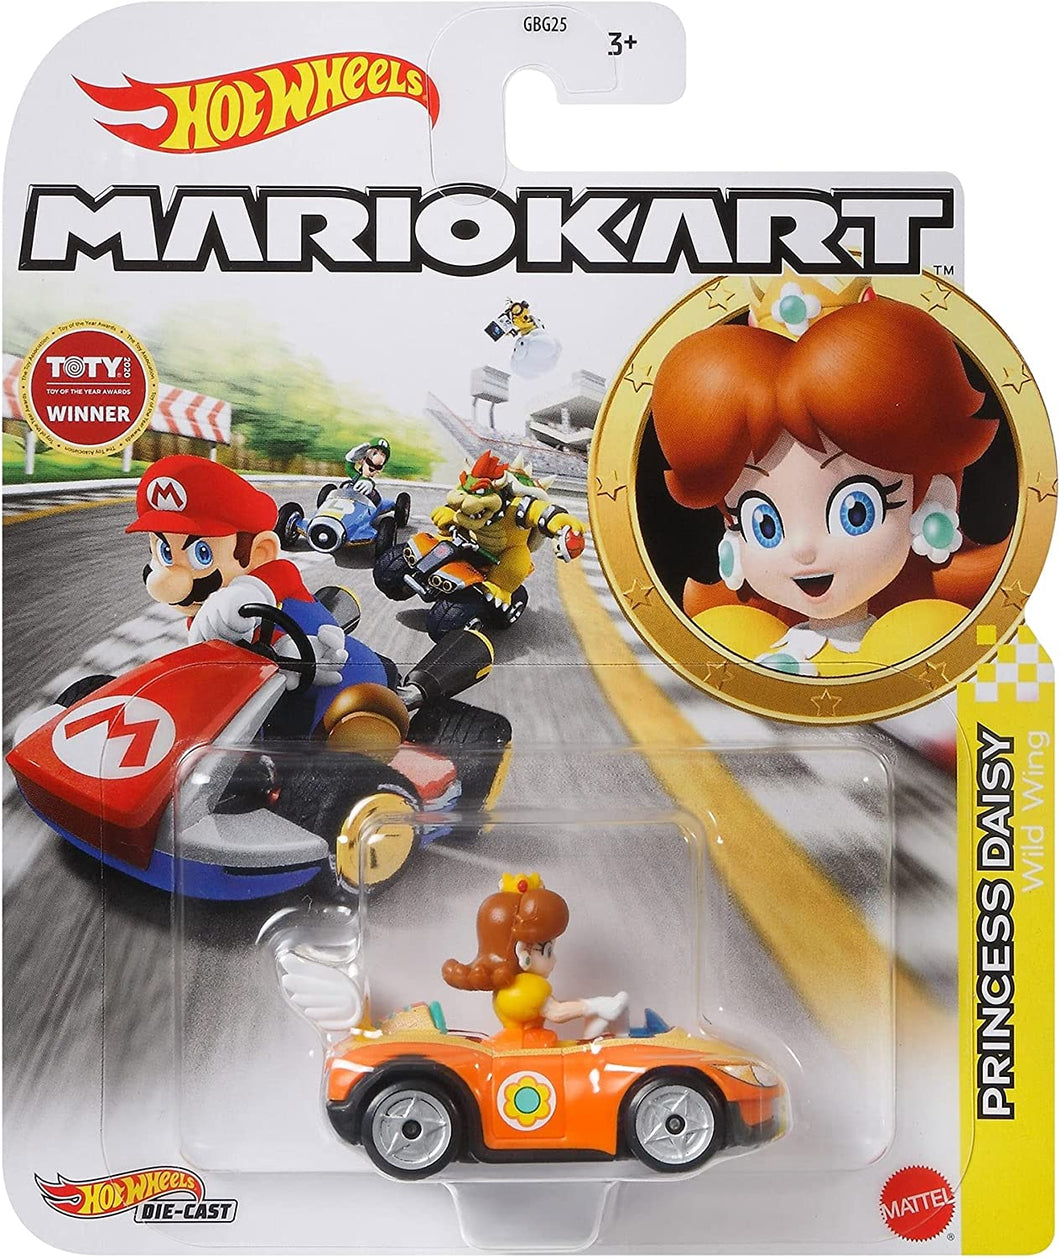 Hot Wheels Mario Kart Princess Daisy Wild Wind